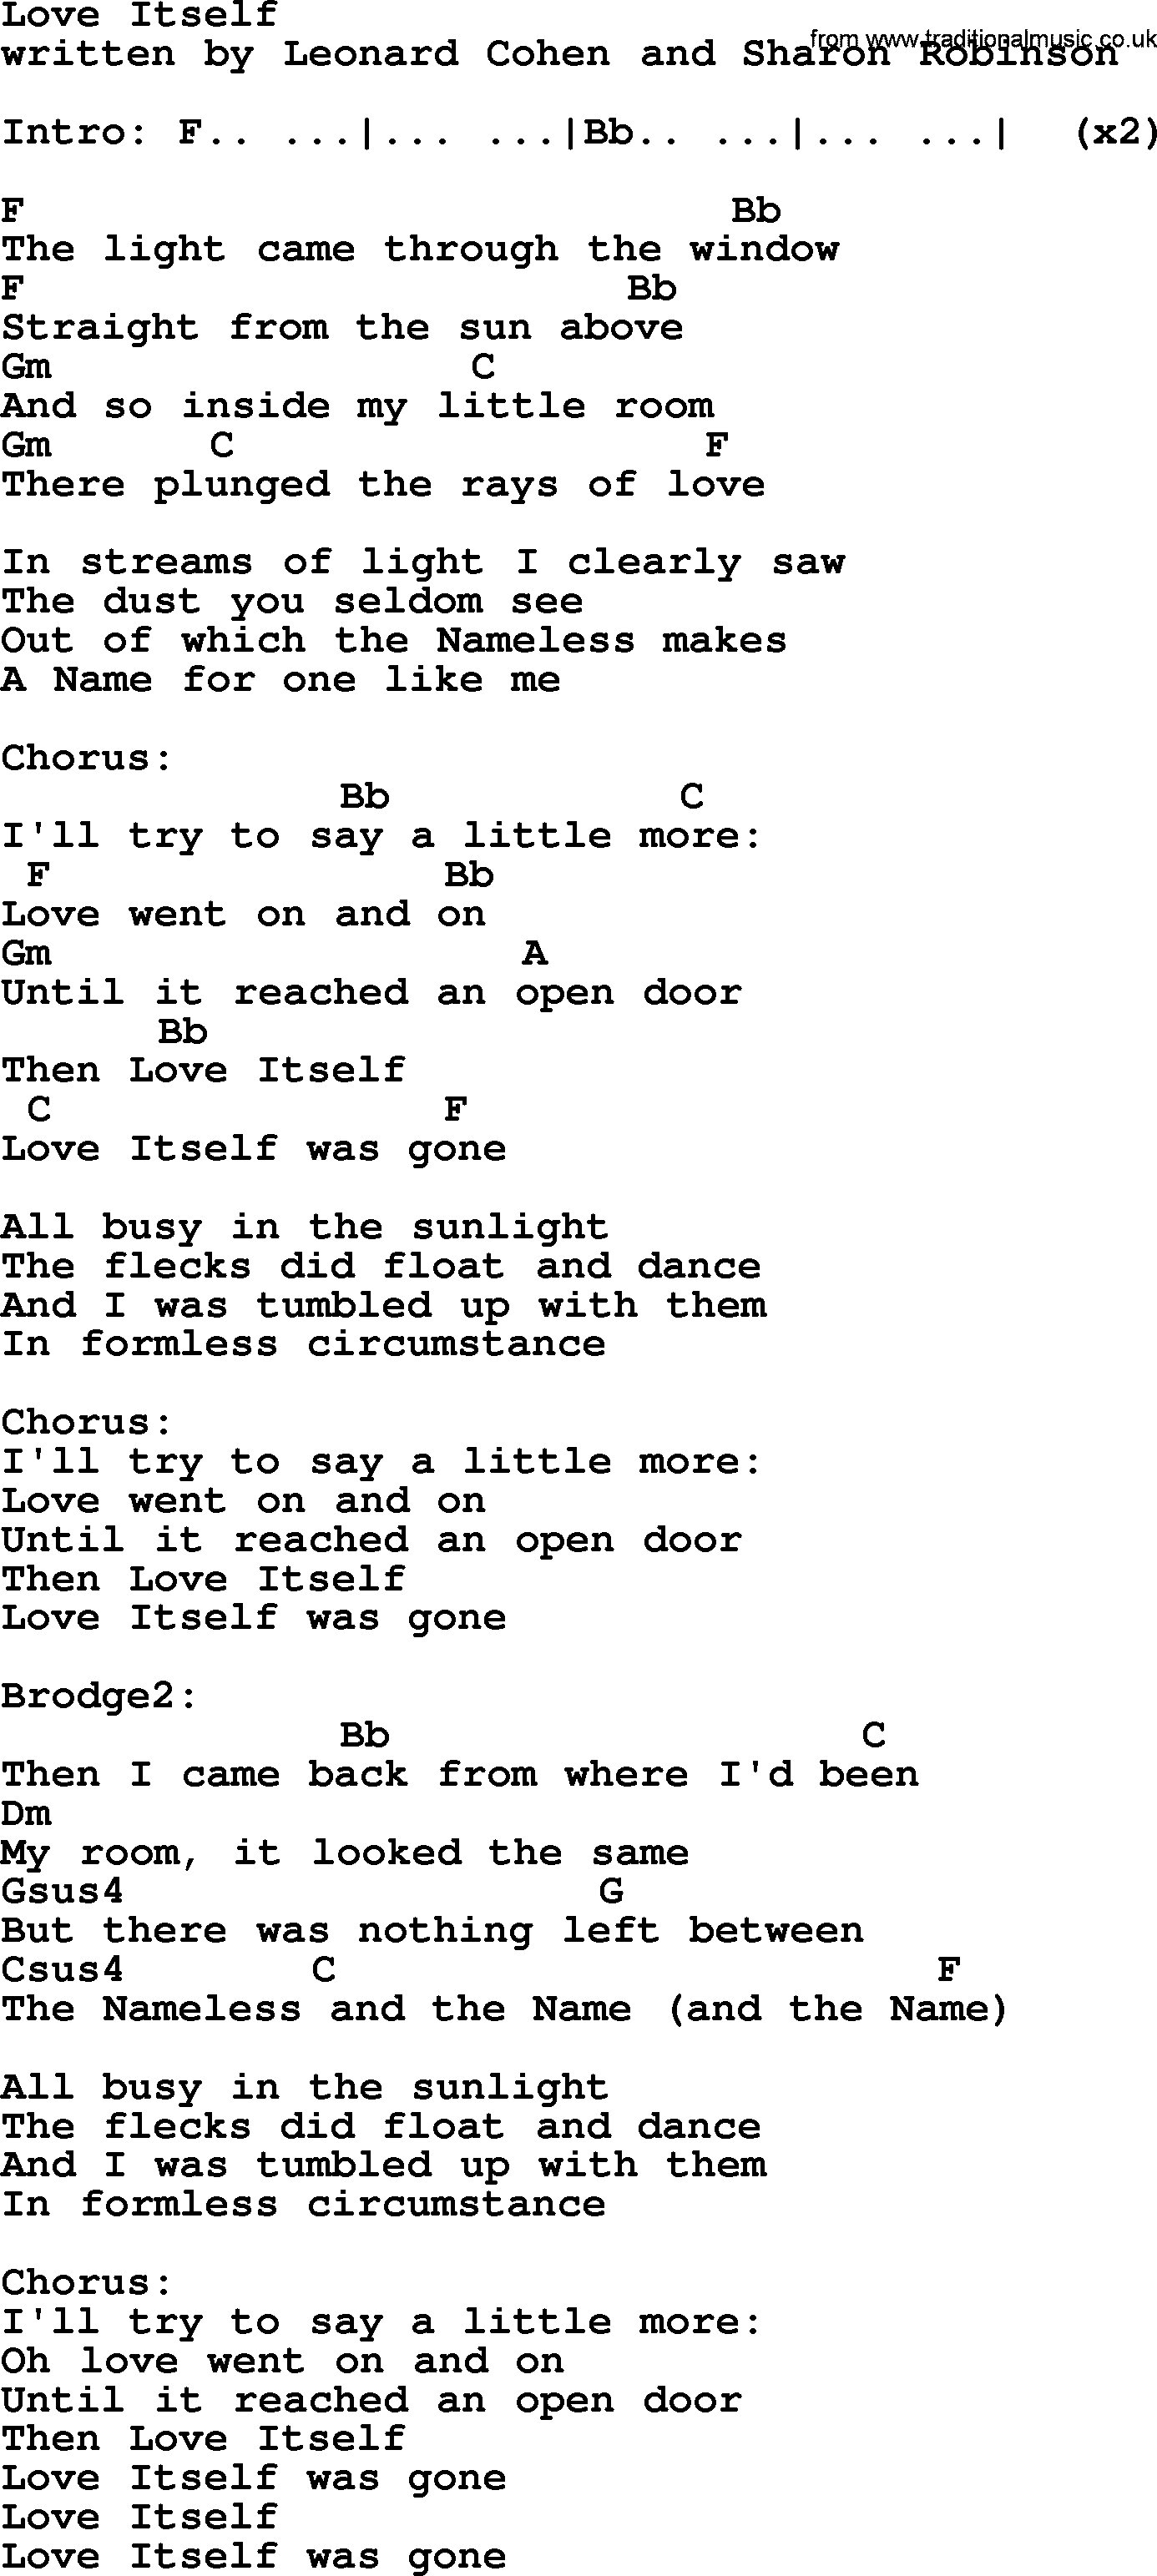 Leonard Cohen song Love Itself, lyrics and chords